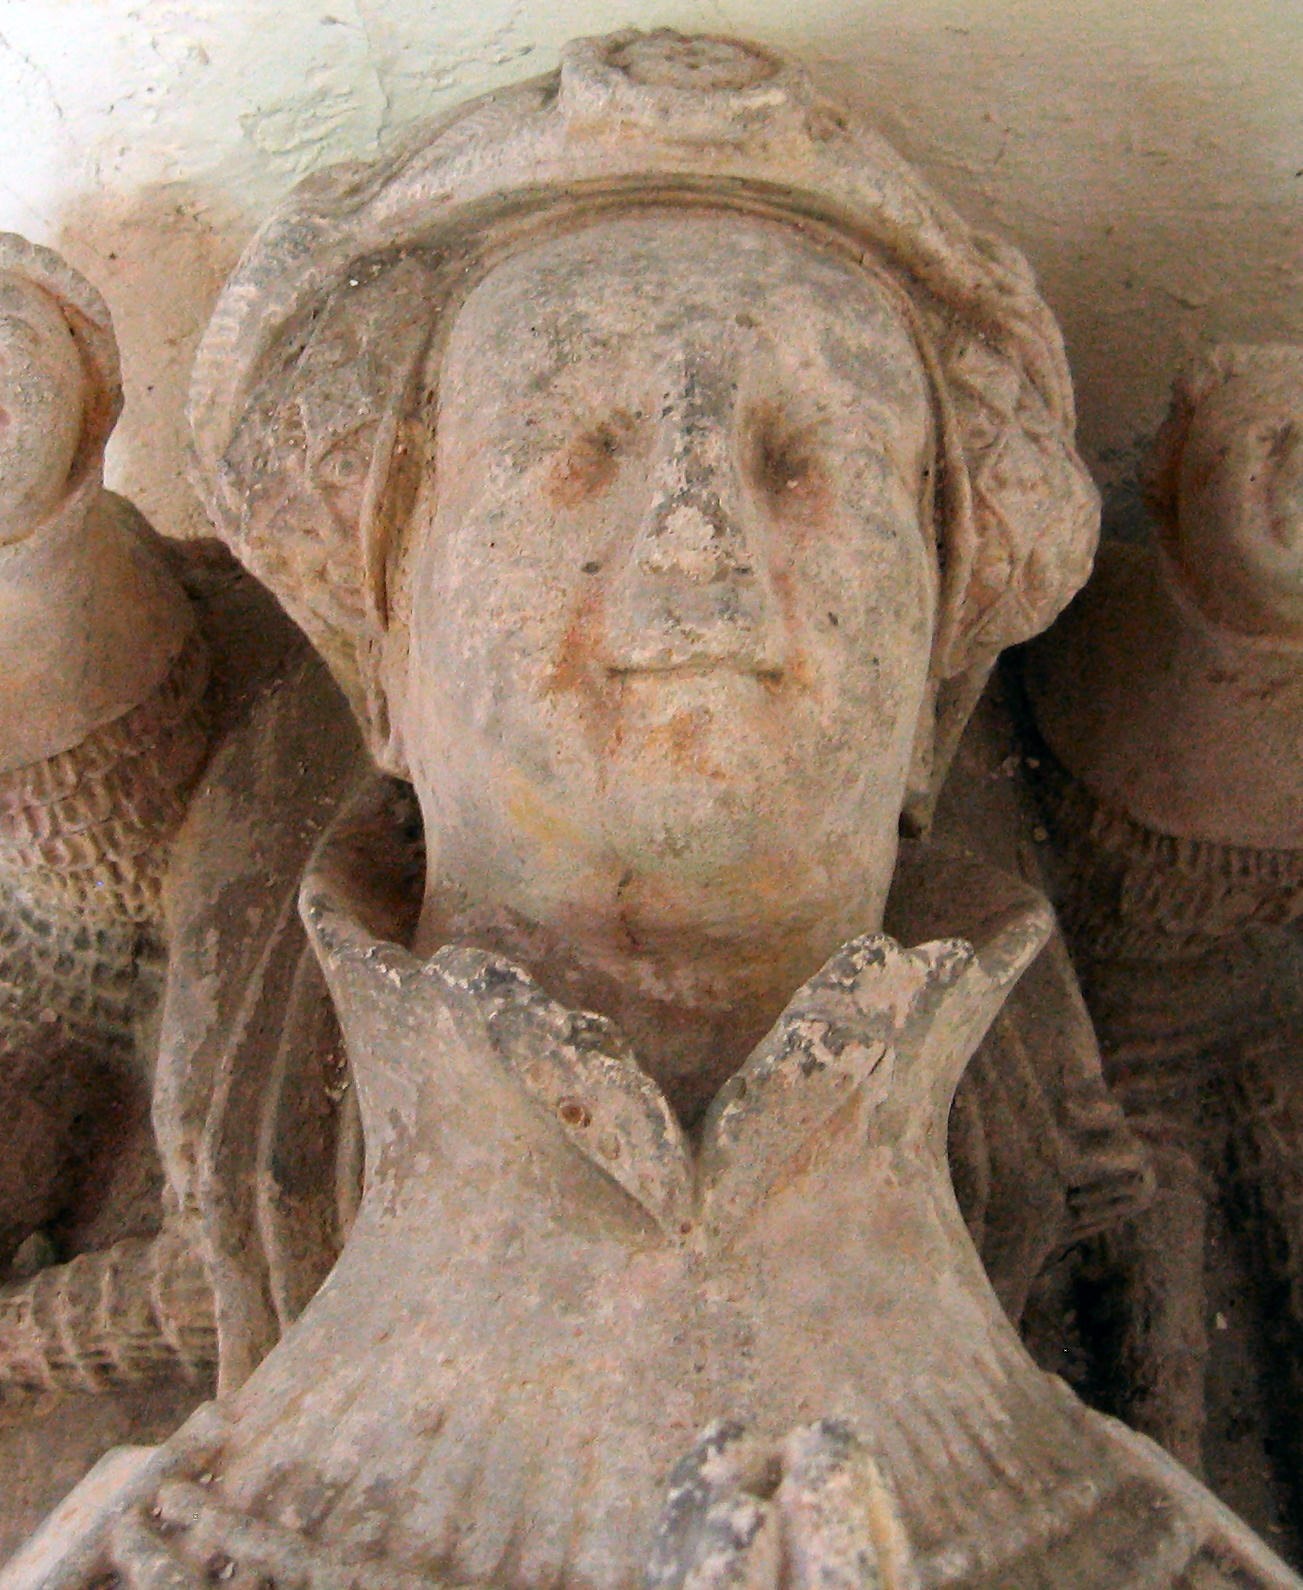 Bust of Isolde 'Isolde de Mortimer' de Audley